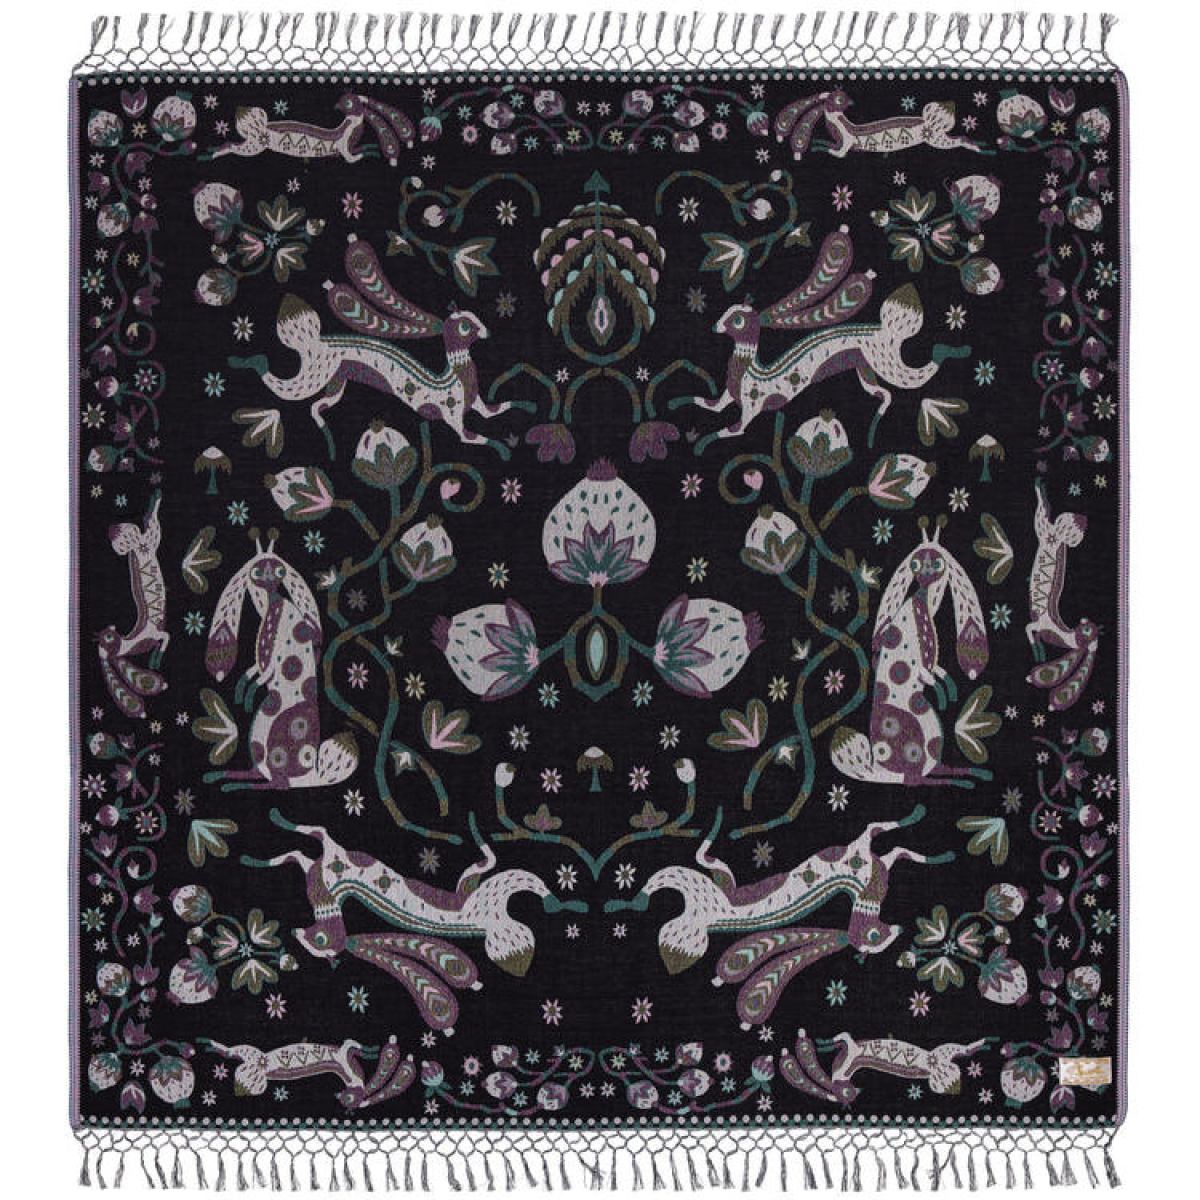 Woven Shawl with Rabbit Motif (Black) made of Wool & Silk (150 x 150 cm)